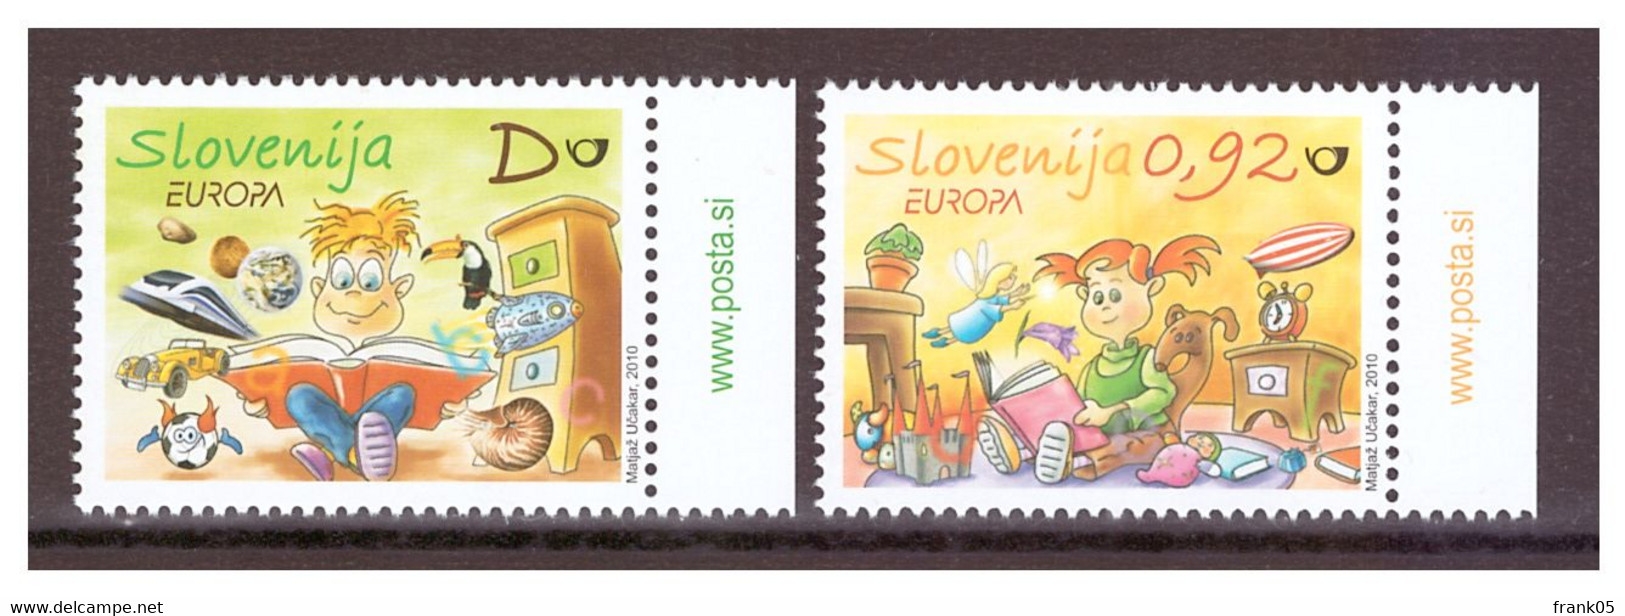 Slowenien / Slovenia / Slovenie 2010 Satz/set EUROPA ** - 2010